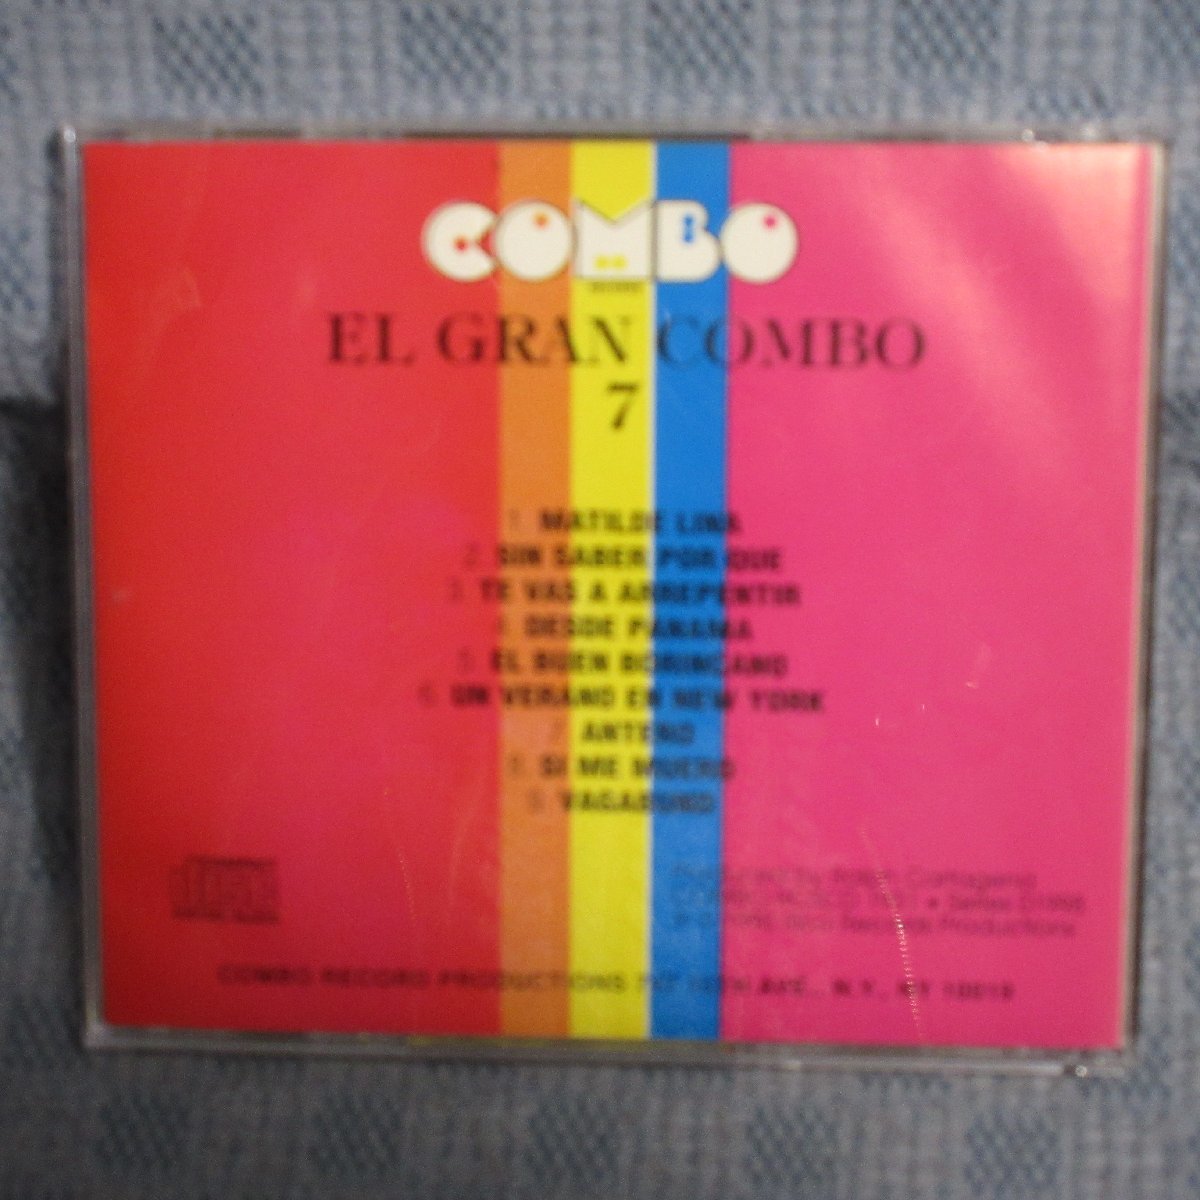 JA809●【送料無料】エル・グラン・コンボ(EL GRAN COMBO)「EN LAS VEGAS/PASAPORTE MUSICAL/7」CD3点セット /サルサ_画像4